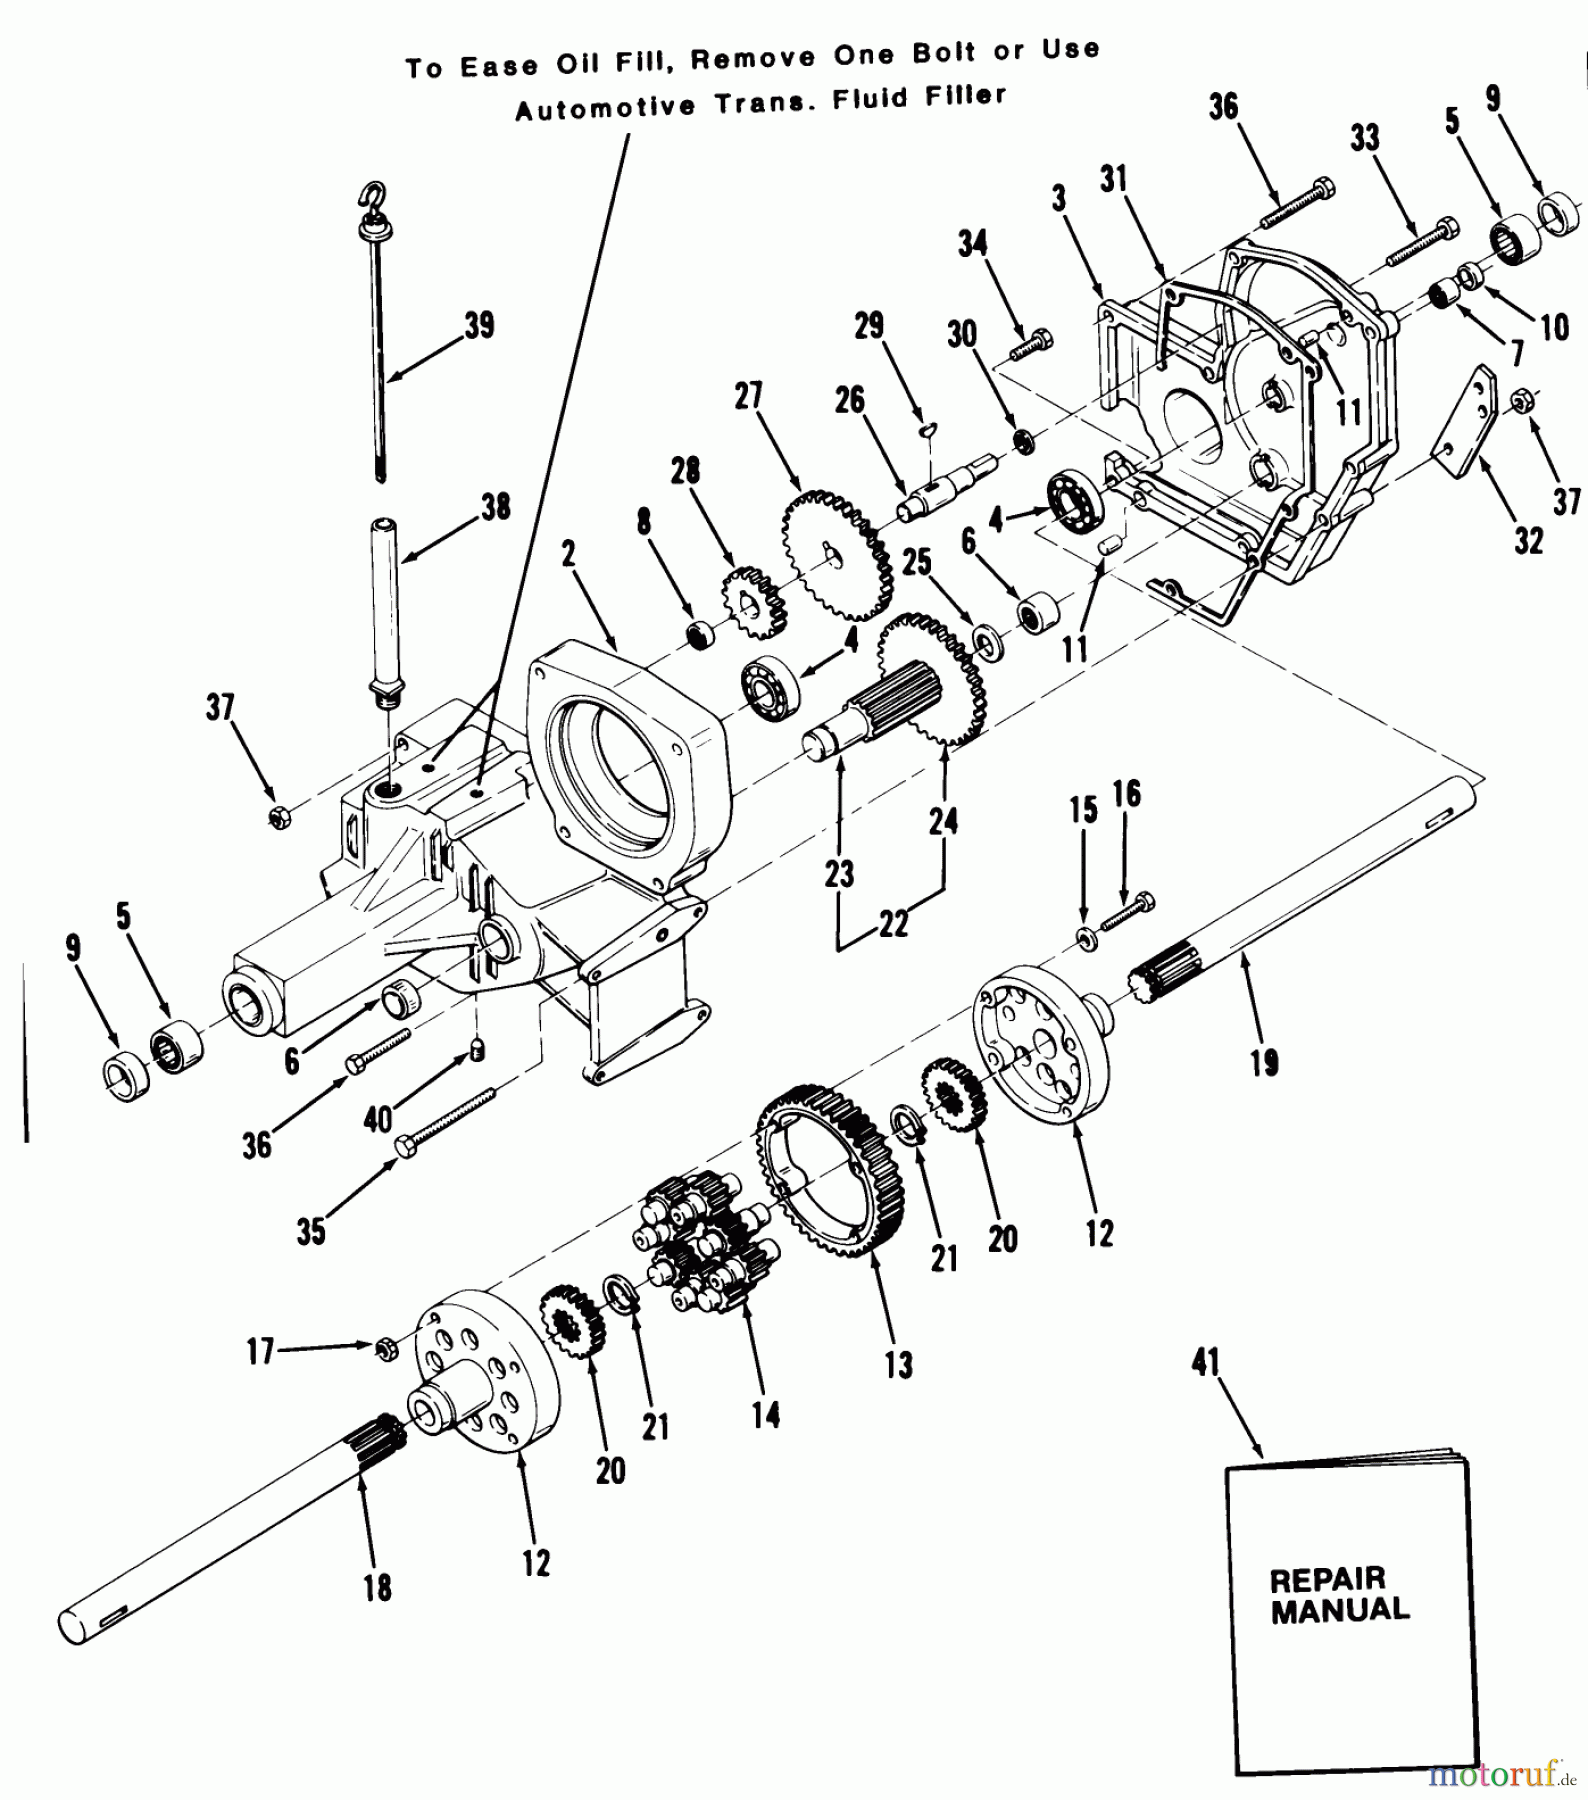  Toro Neu Mowers, Lawn & Garden Tractor Seite 1 11-14KE01 (C-145) - Toro C-145 Automatic Tractor, 1984 TRANSAXLE